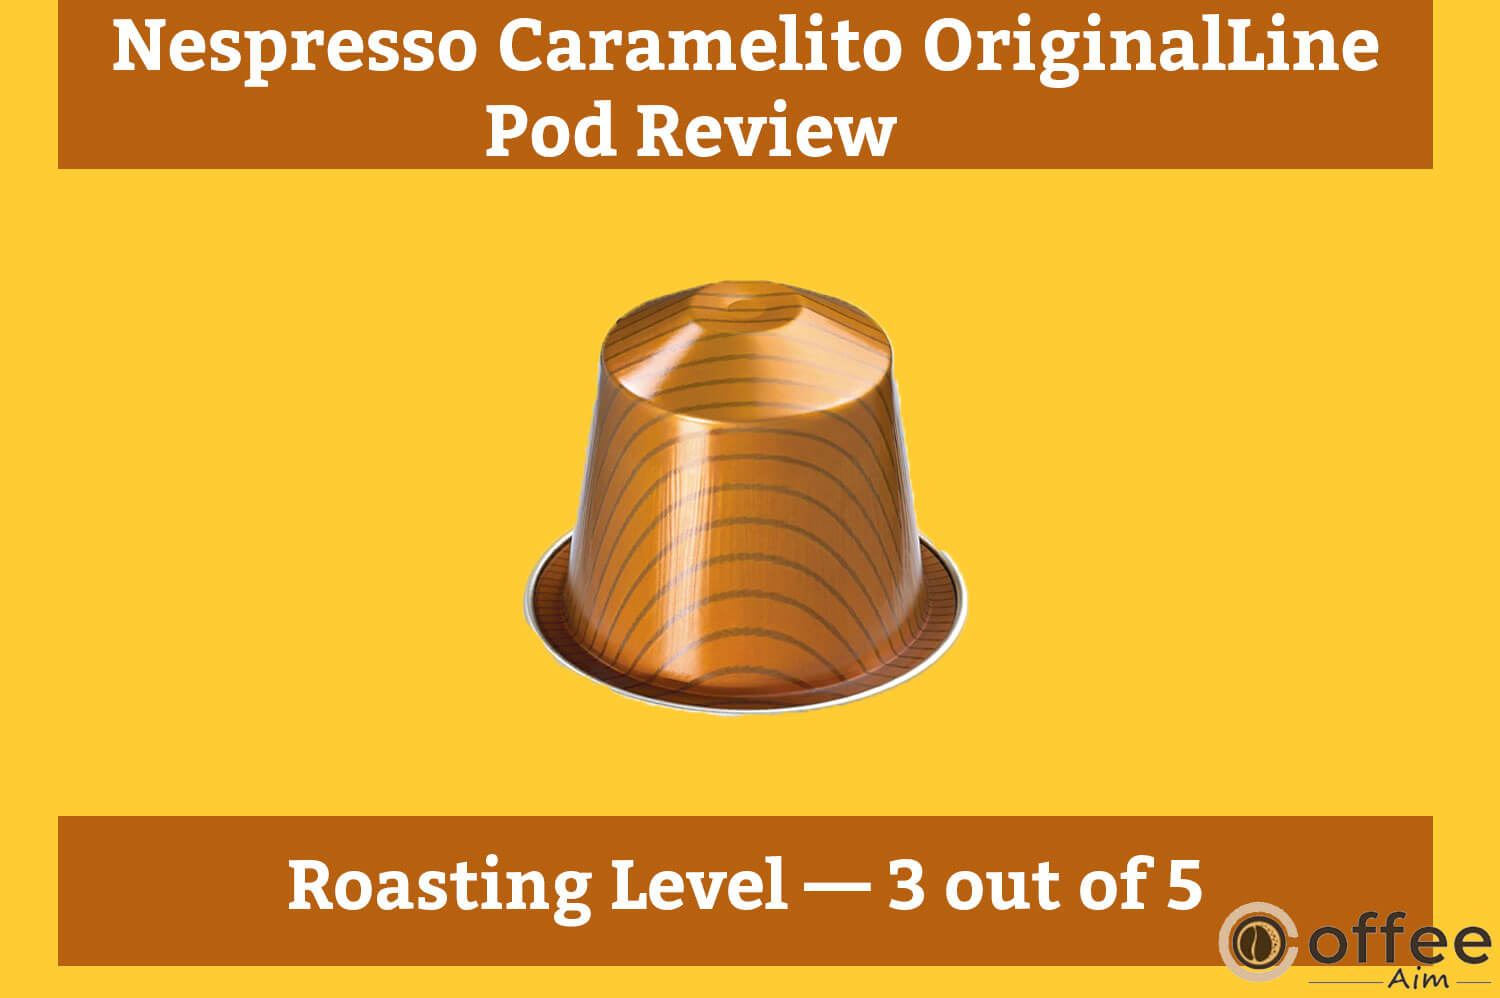 The image depicts the roasting level of "Nespresso Caramelito OriginalLine Pod" discussed in the review "Nespresso Caramelito OriginalLine Pod Review."